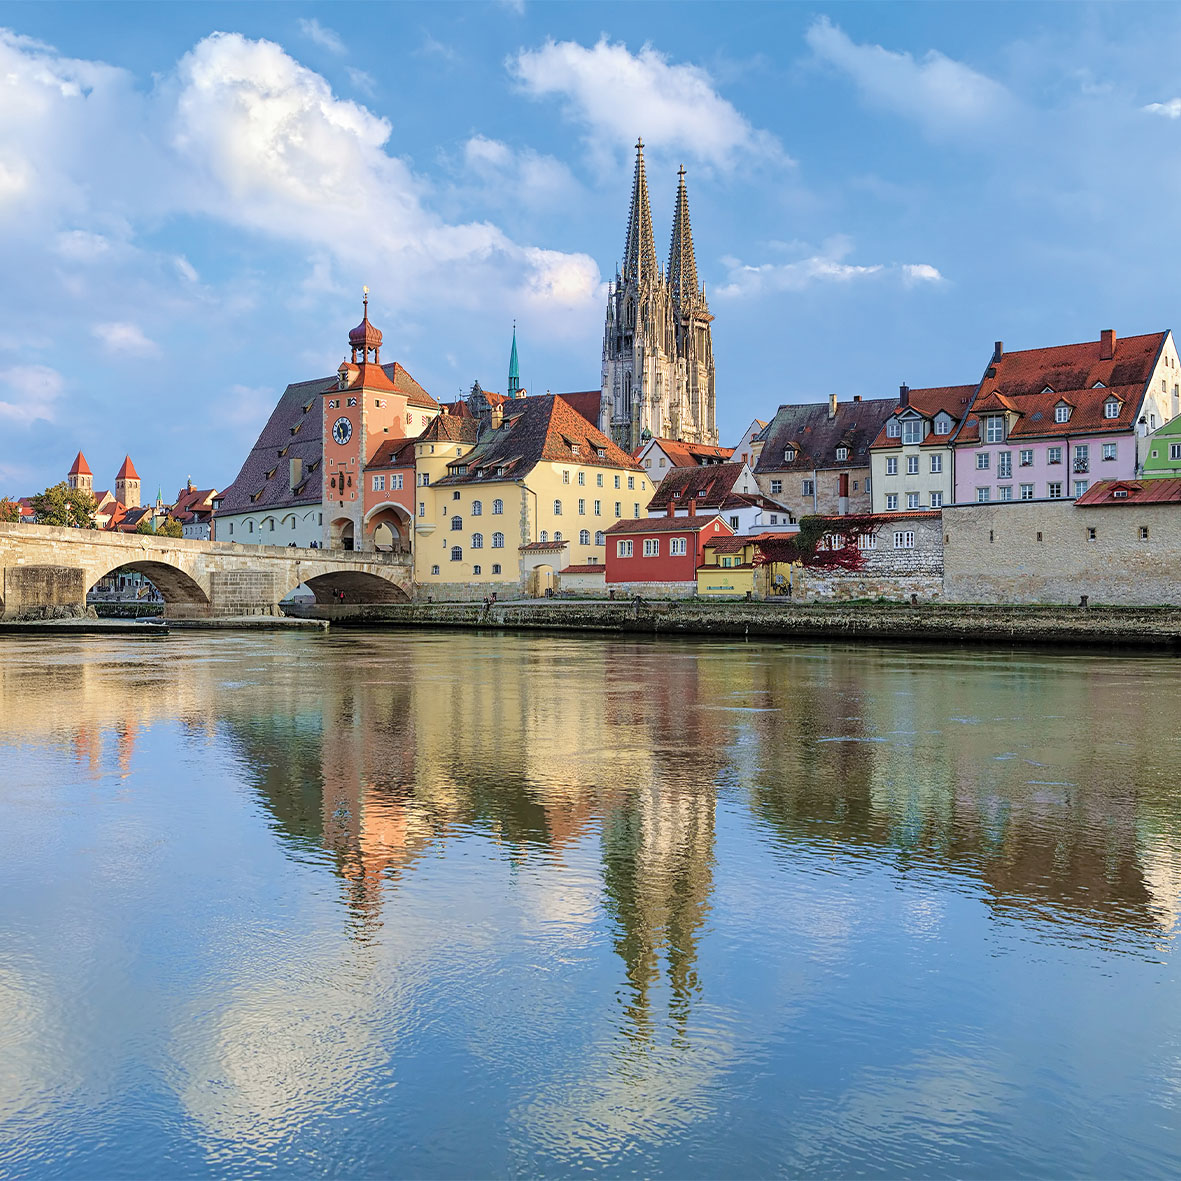 Regensburg Cathedral and Stone Bridge over Danube